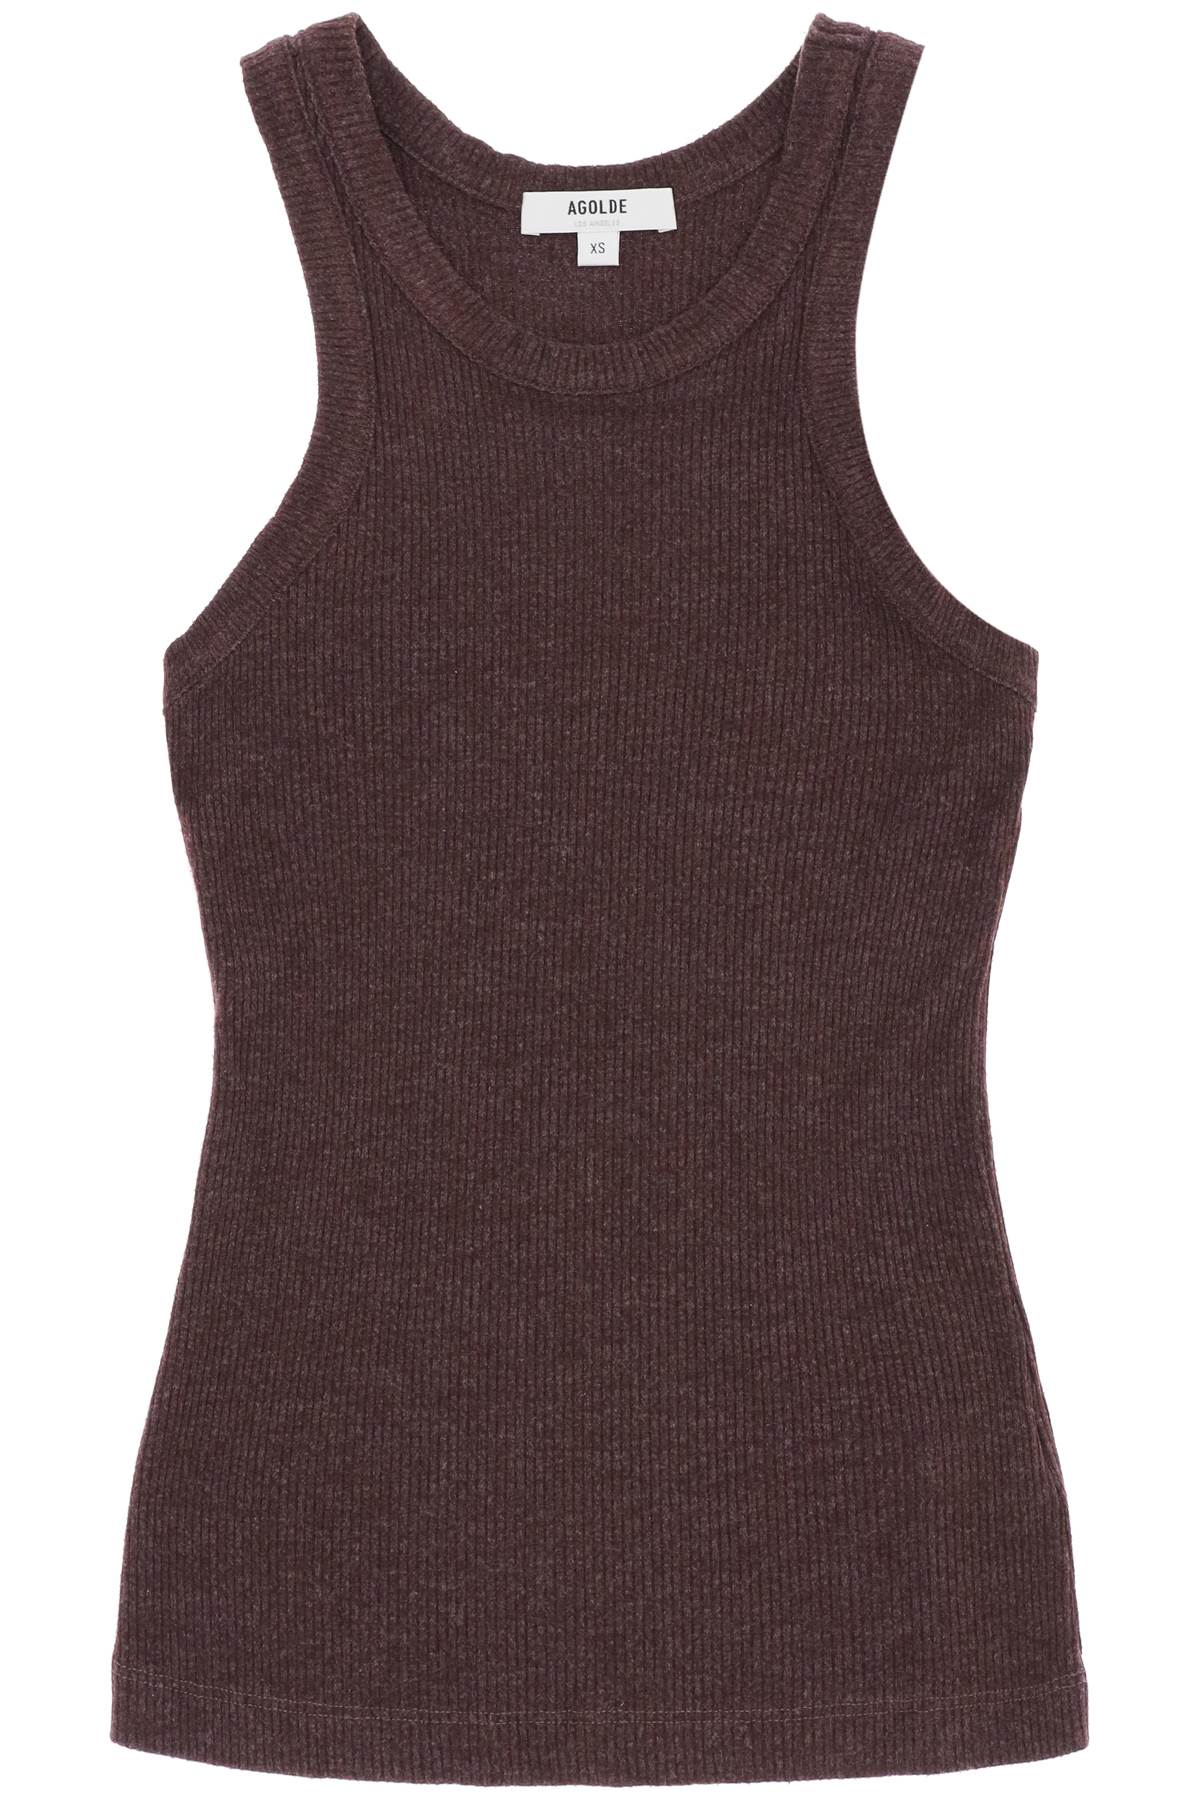 Agolde "bailey knit sleeveless-0